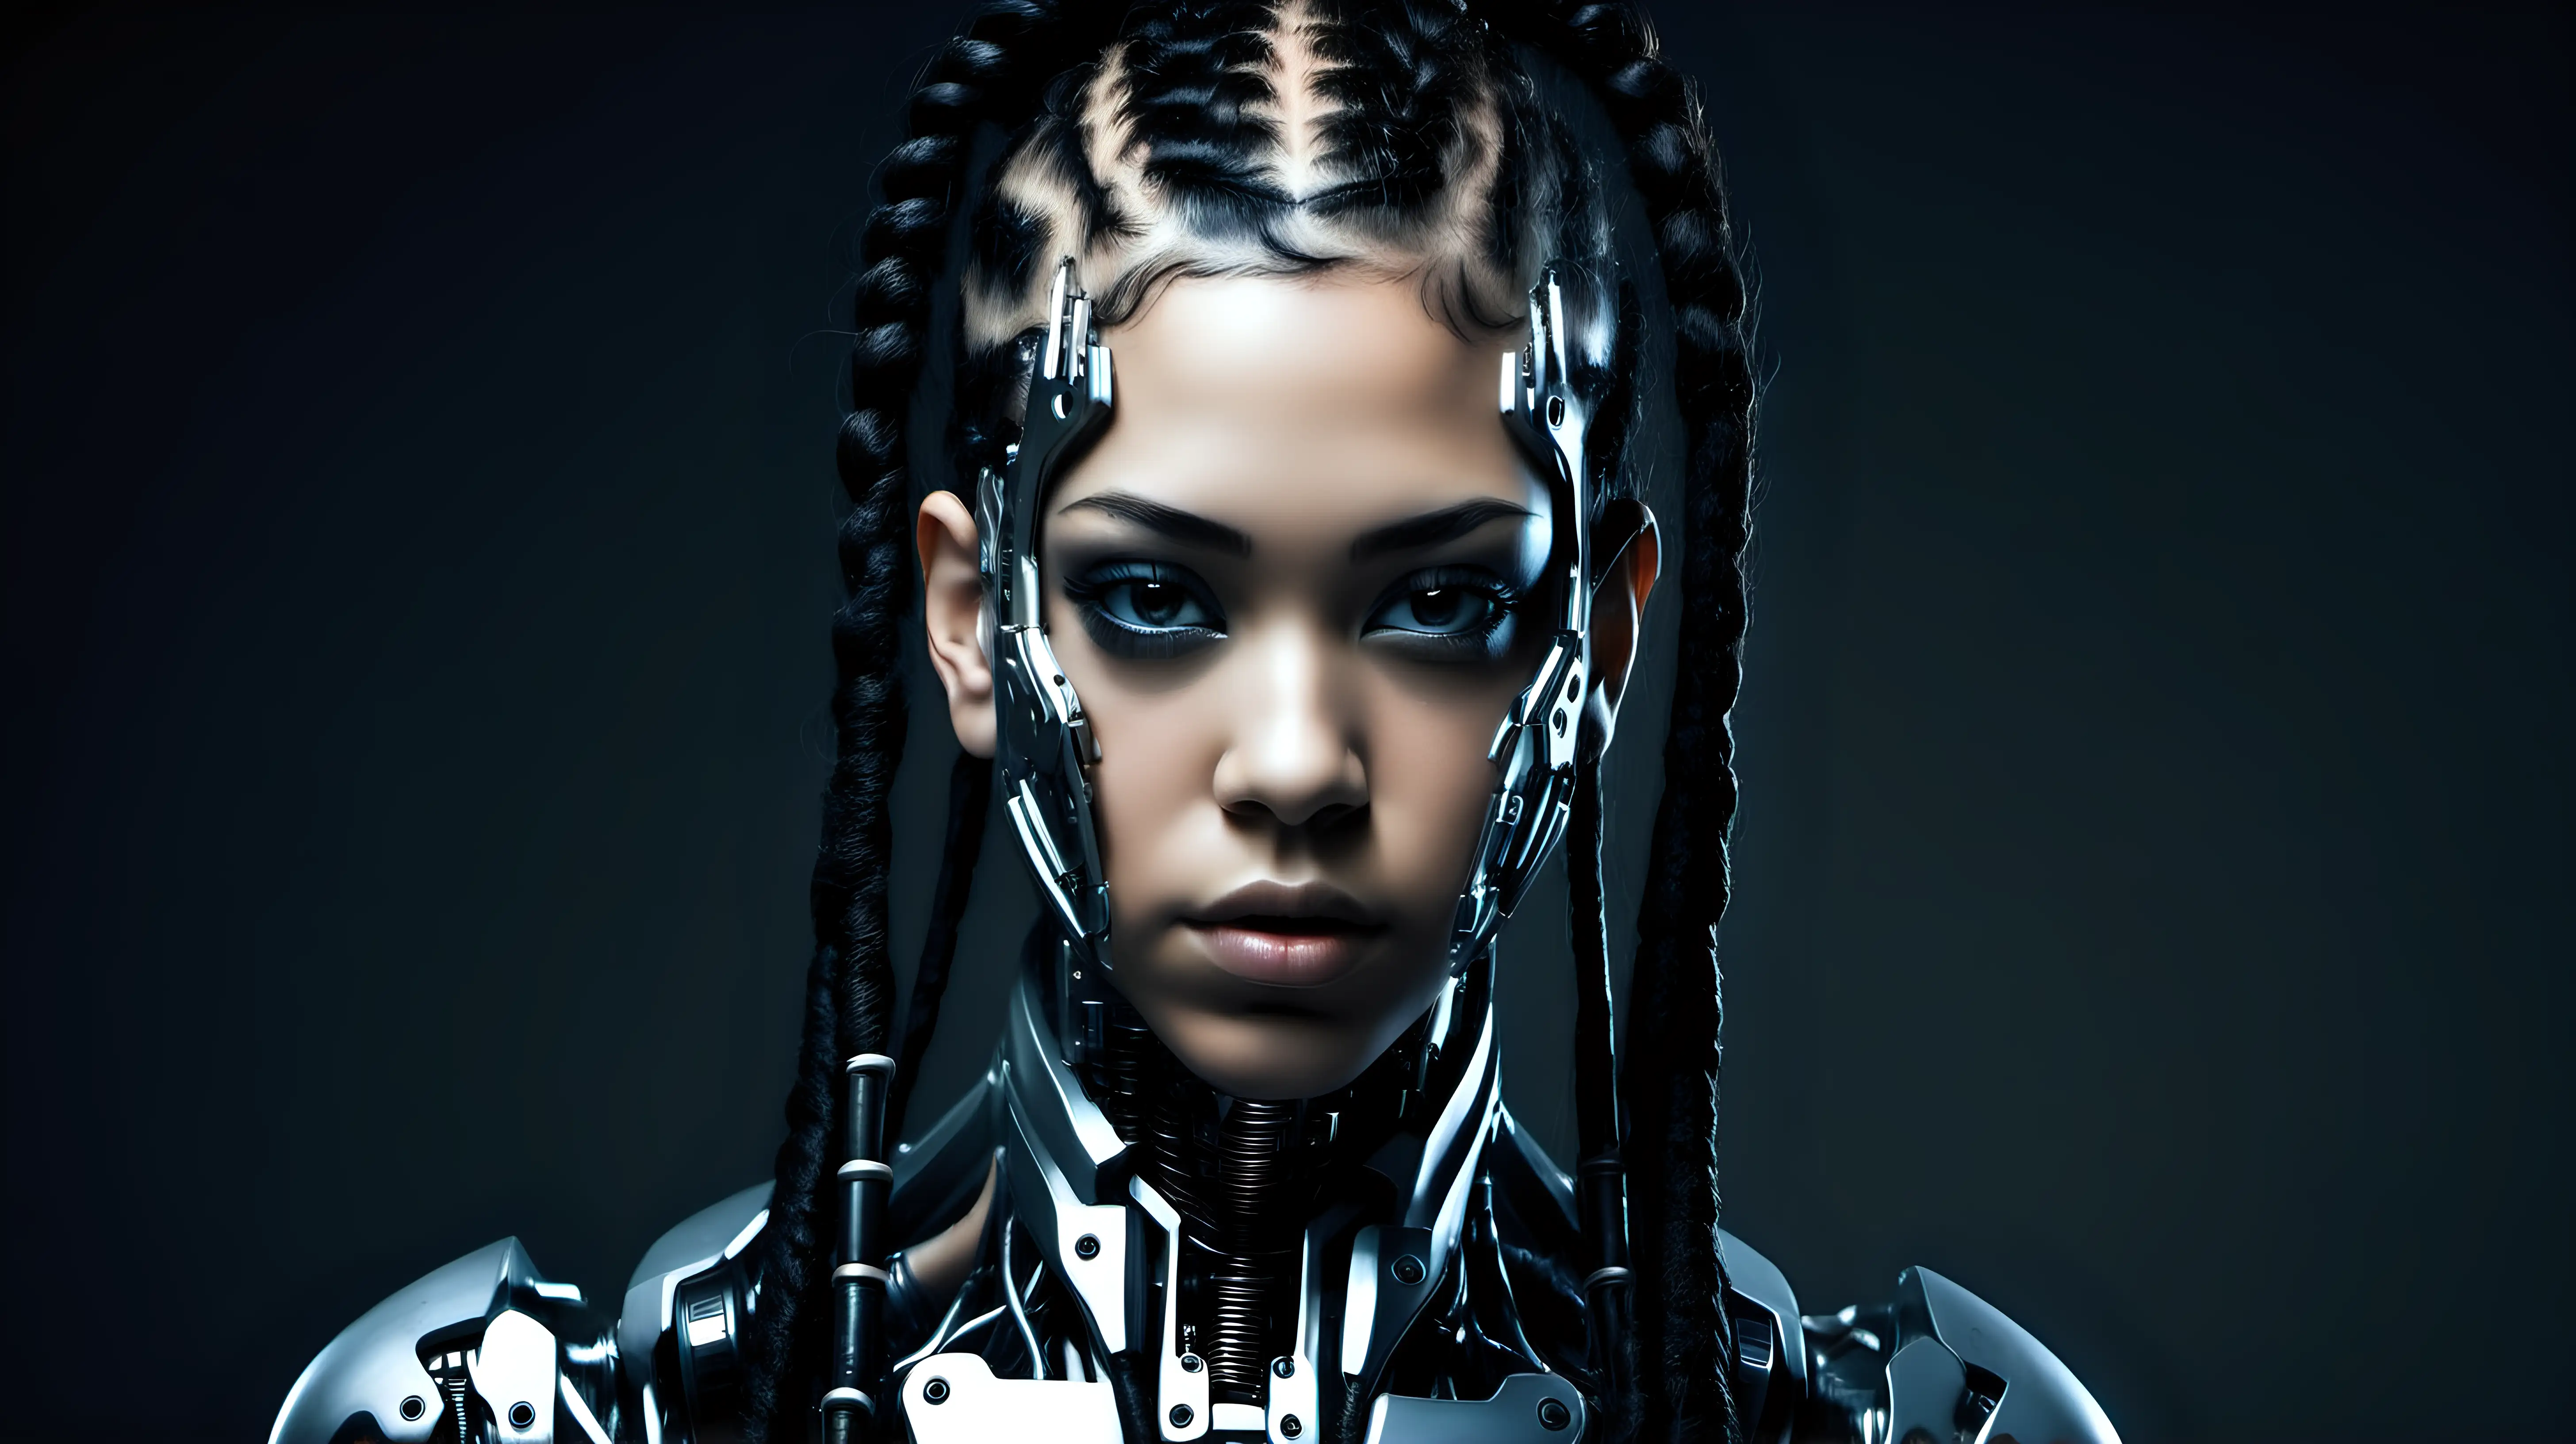 Beautiful Cyborg Woman with Wild Braided Hair